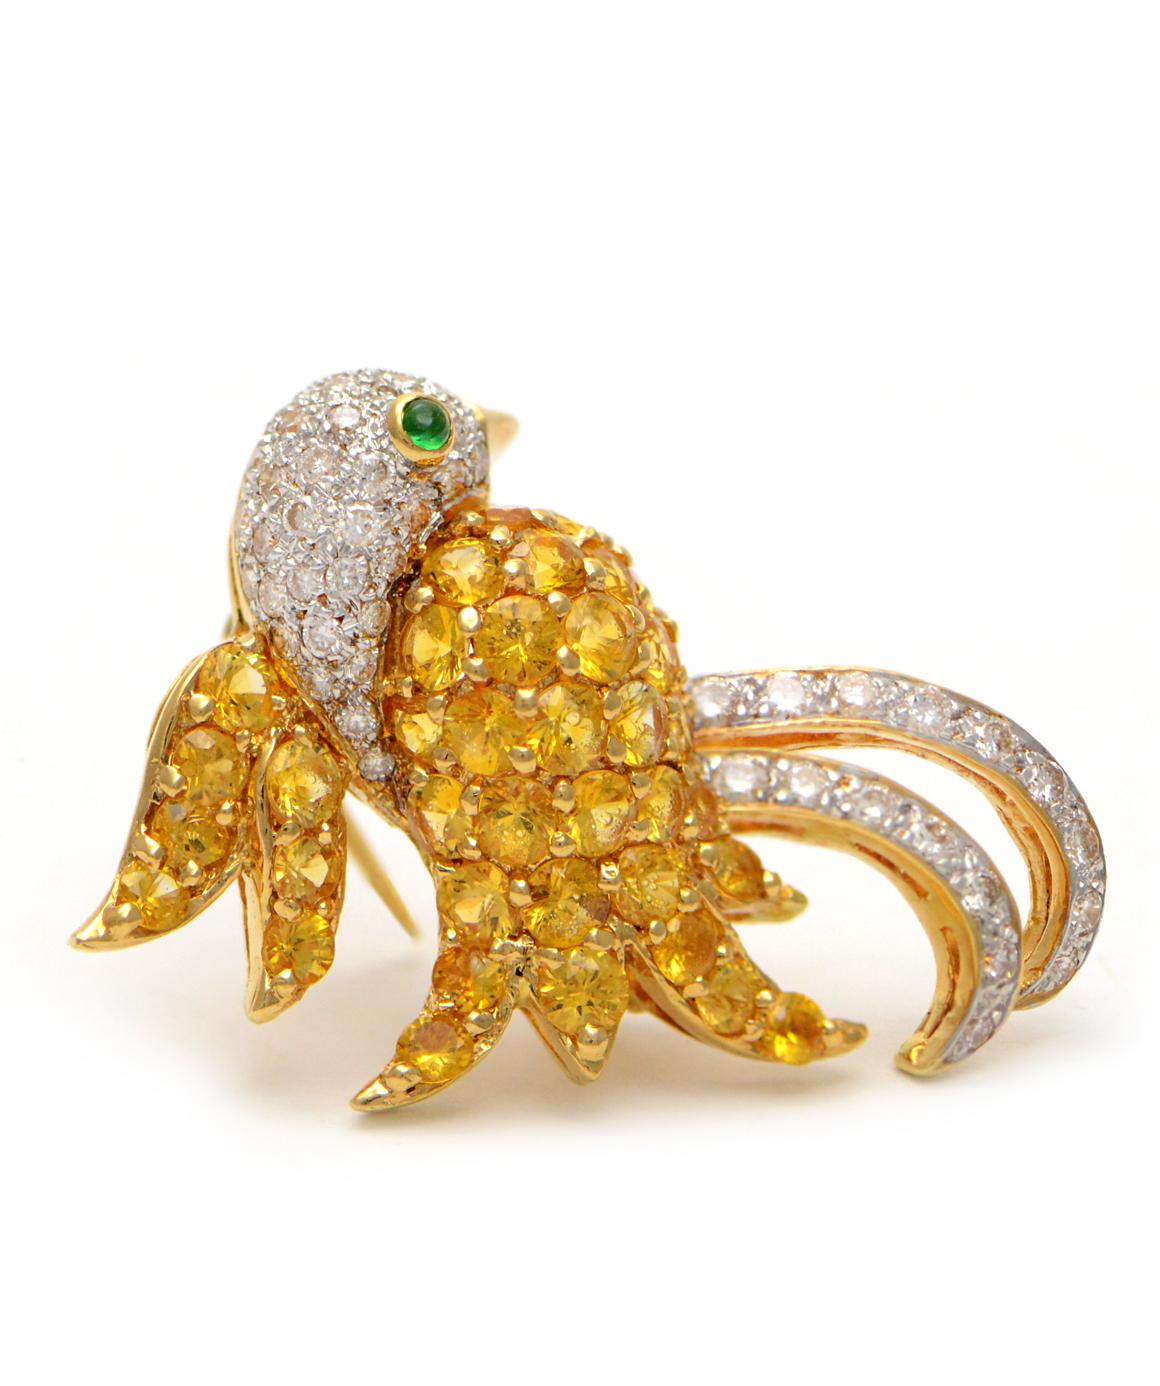 Women's or Men's Solid 18K Yellow Gold Bird Brooch with Genuine Diamonds, Citrine & Emerald 10.1g